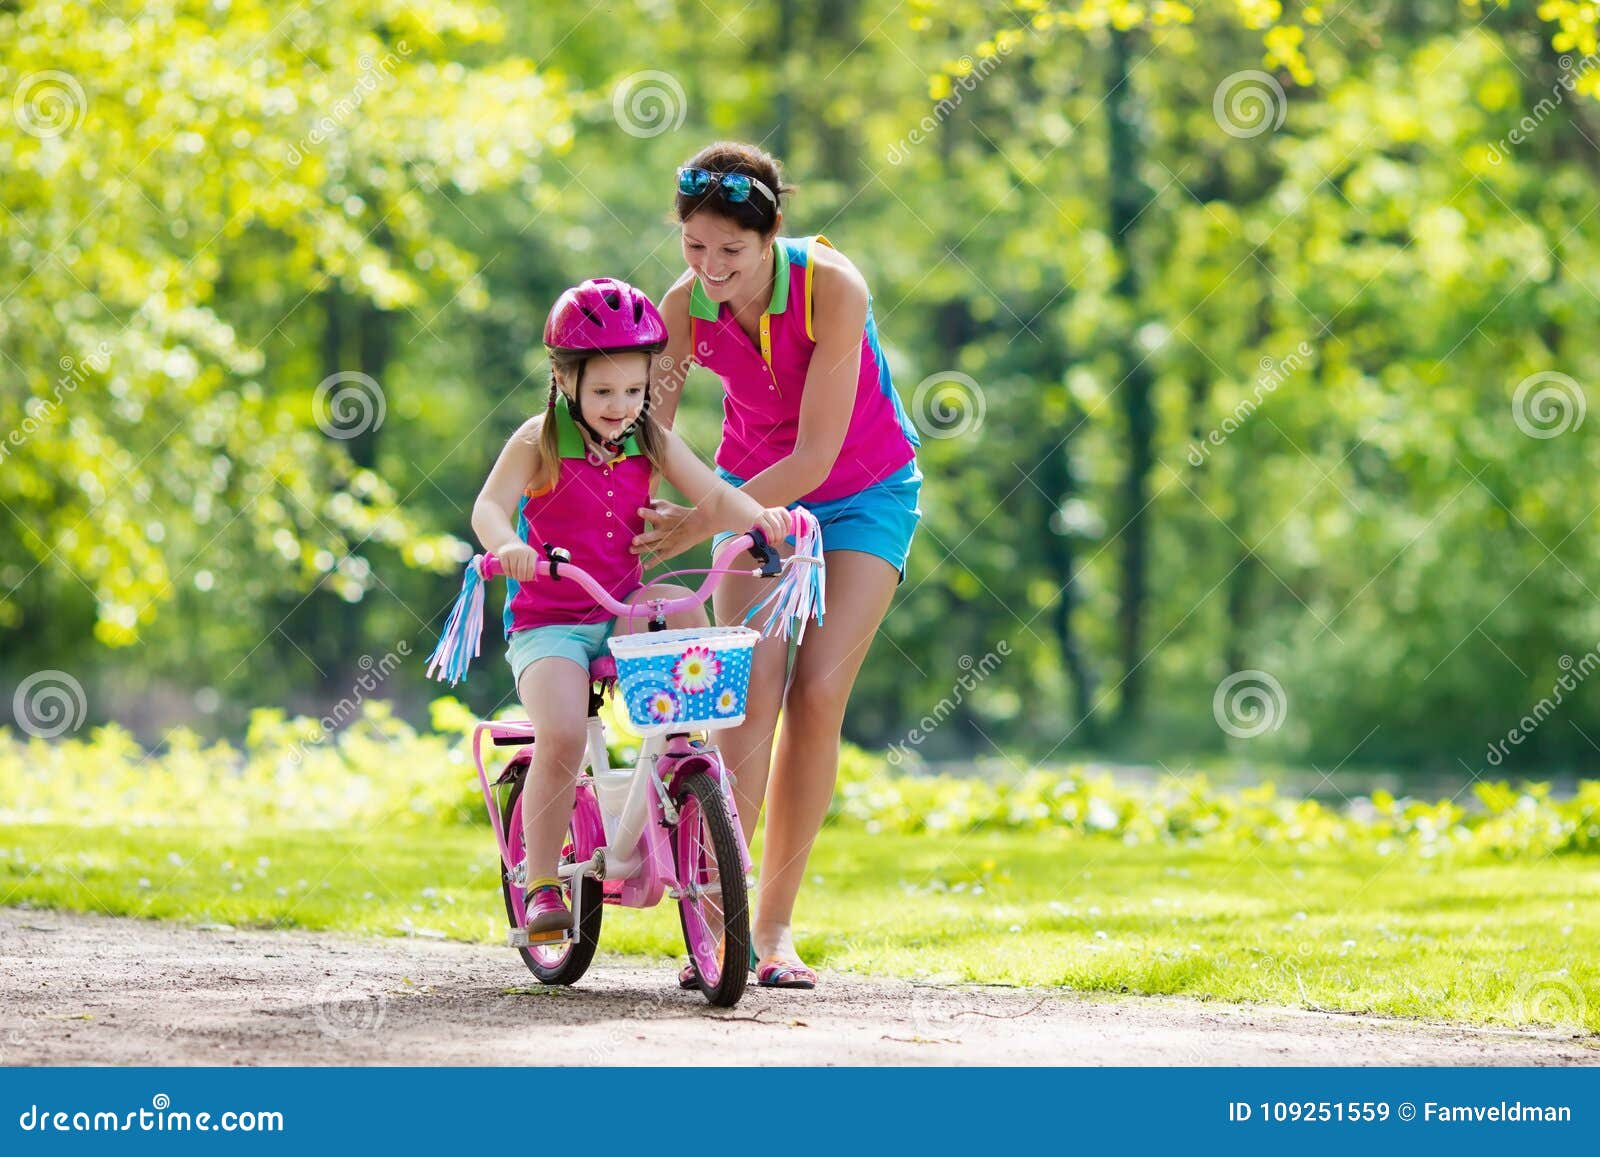 how to help child ride bike